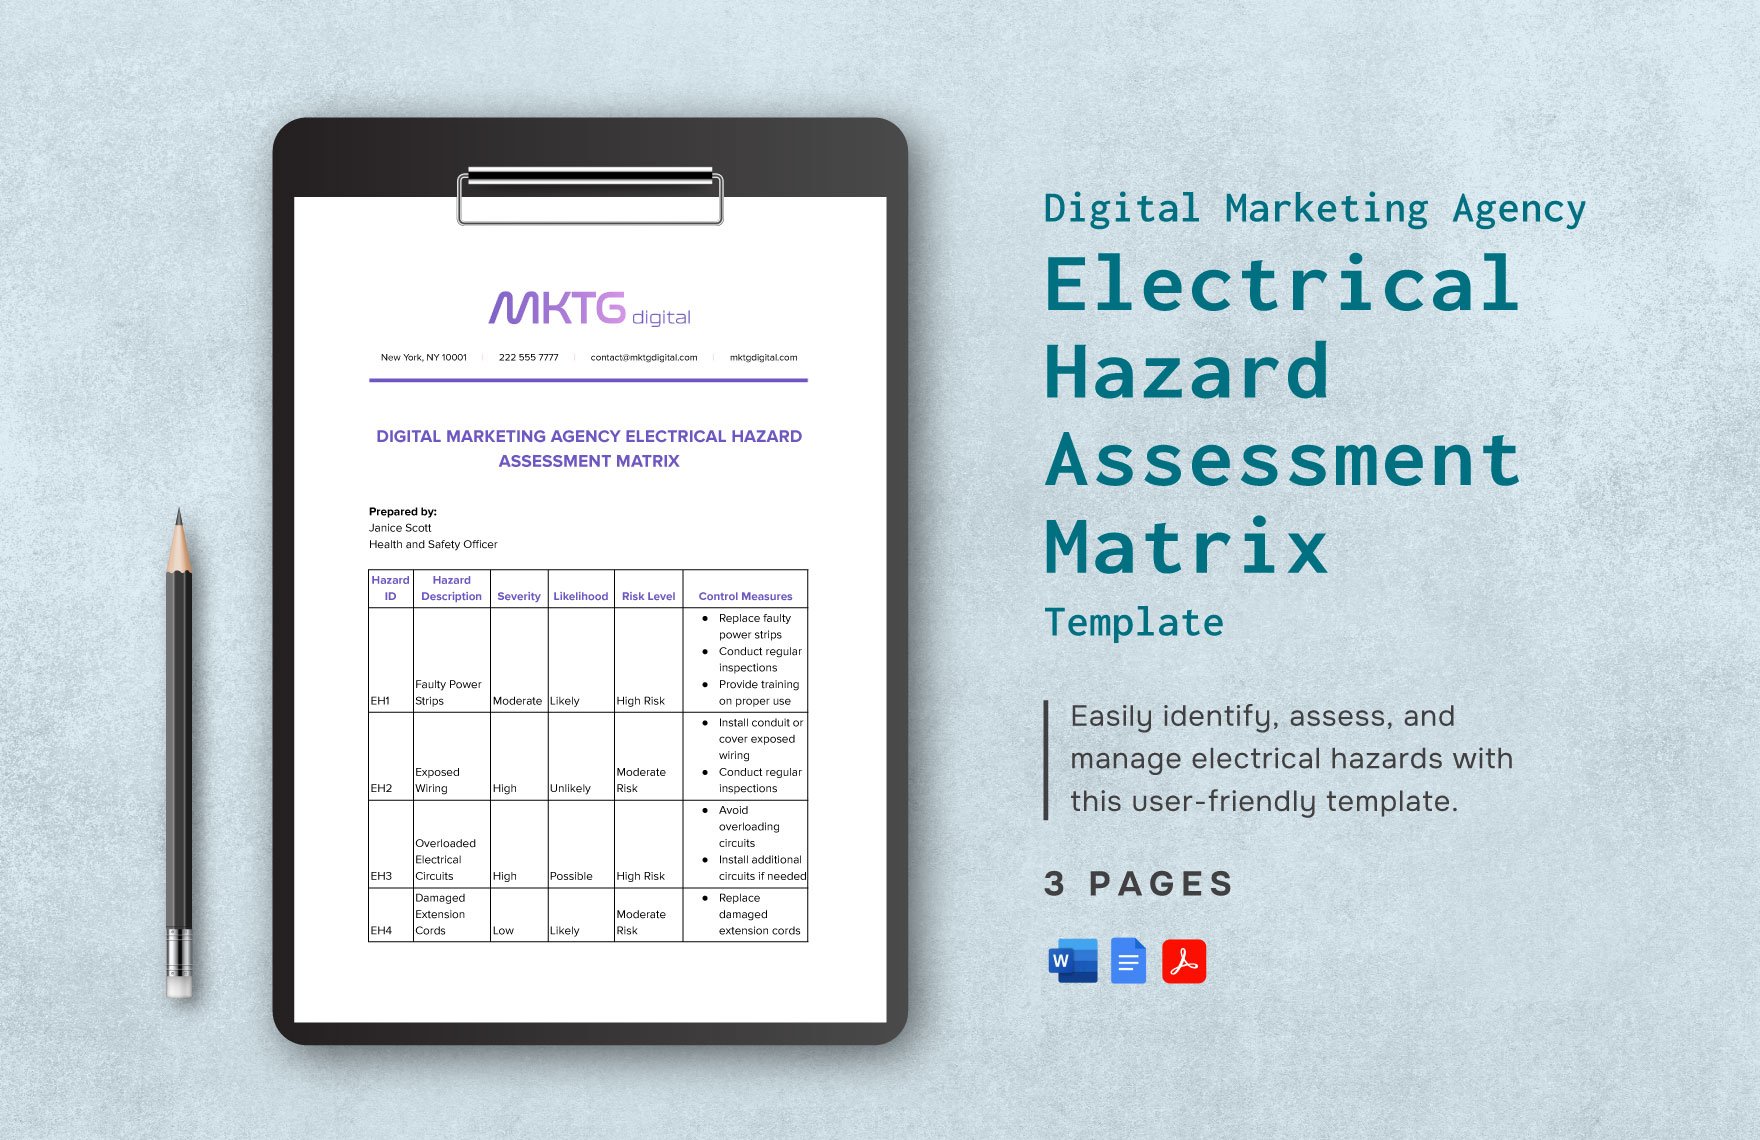 Digital Marketing Agency Electrical Hazard Assessment Matrix Template